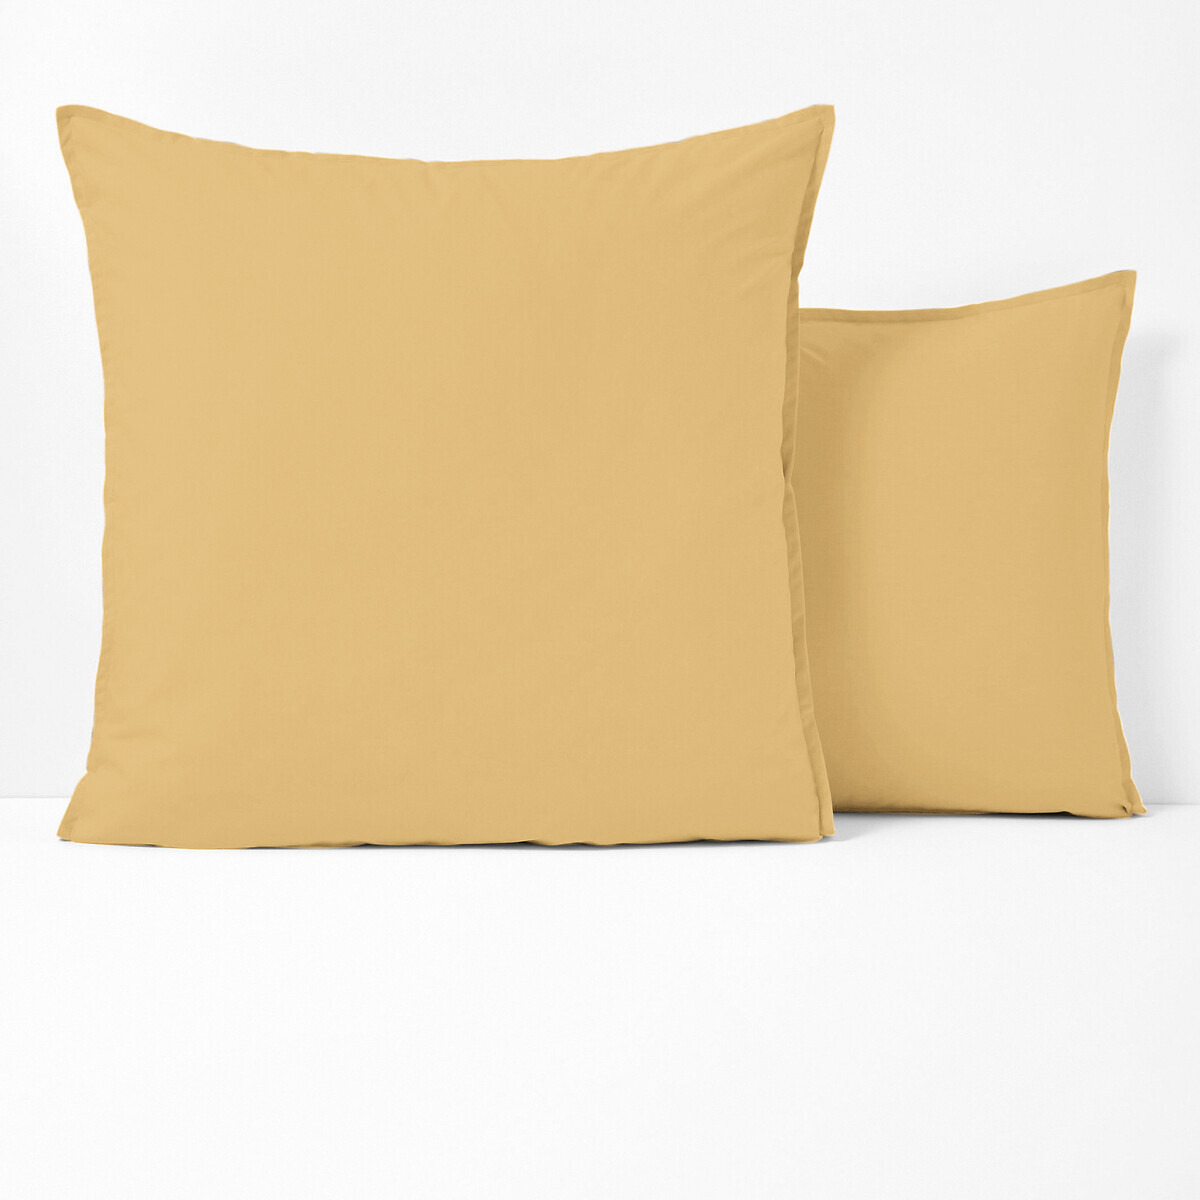 Pillowcase in Plain Organic Cotton Percale - image 1